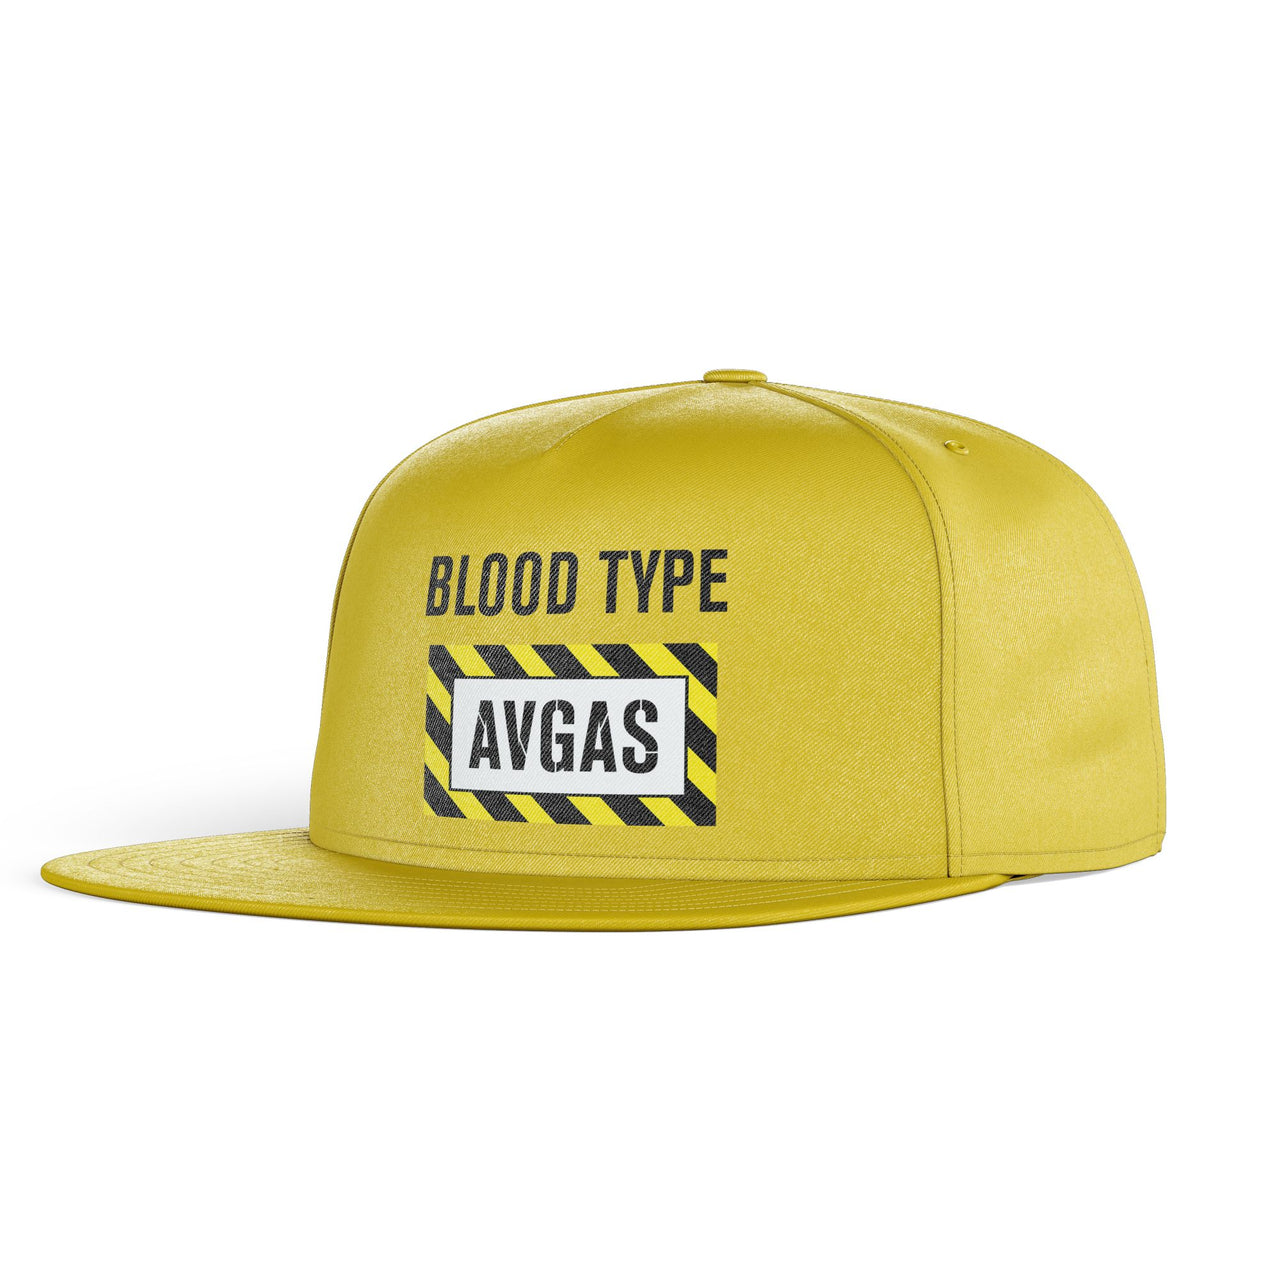 Blood Type AVGAS Designed Snapback Caps & Hats